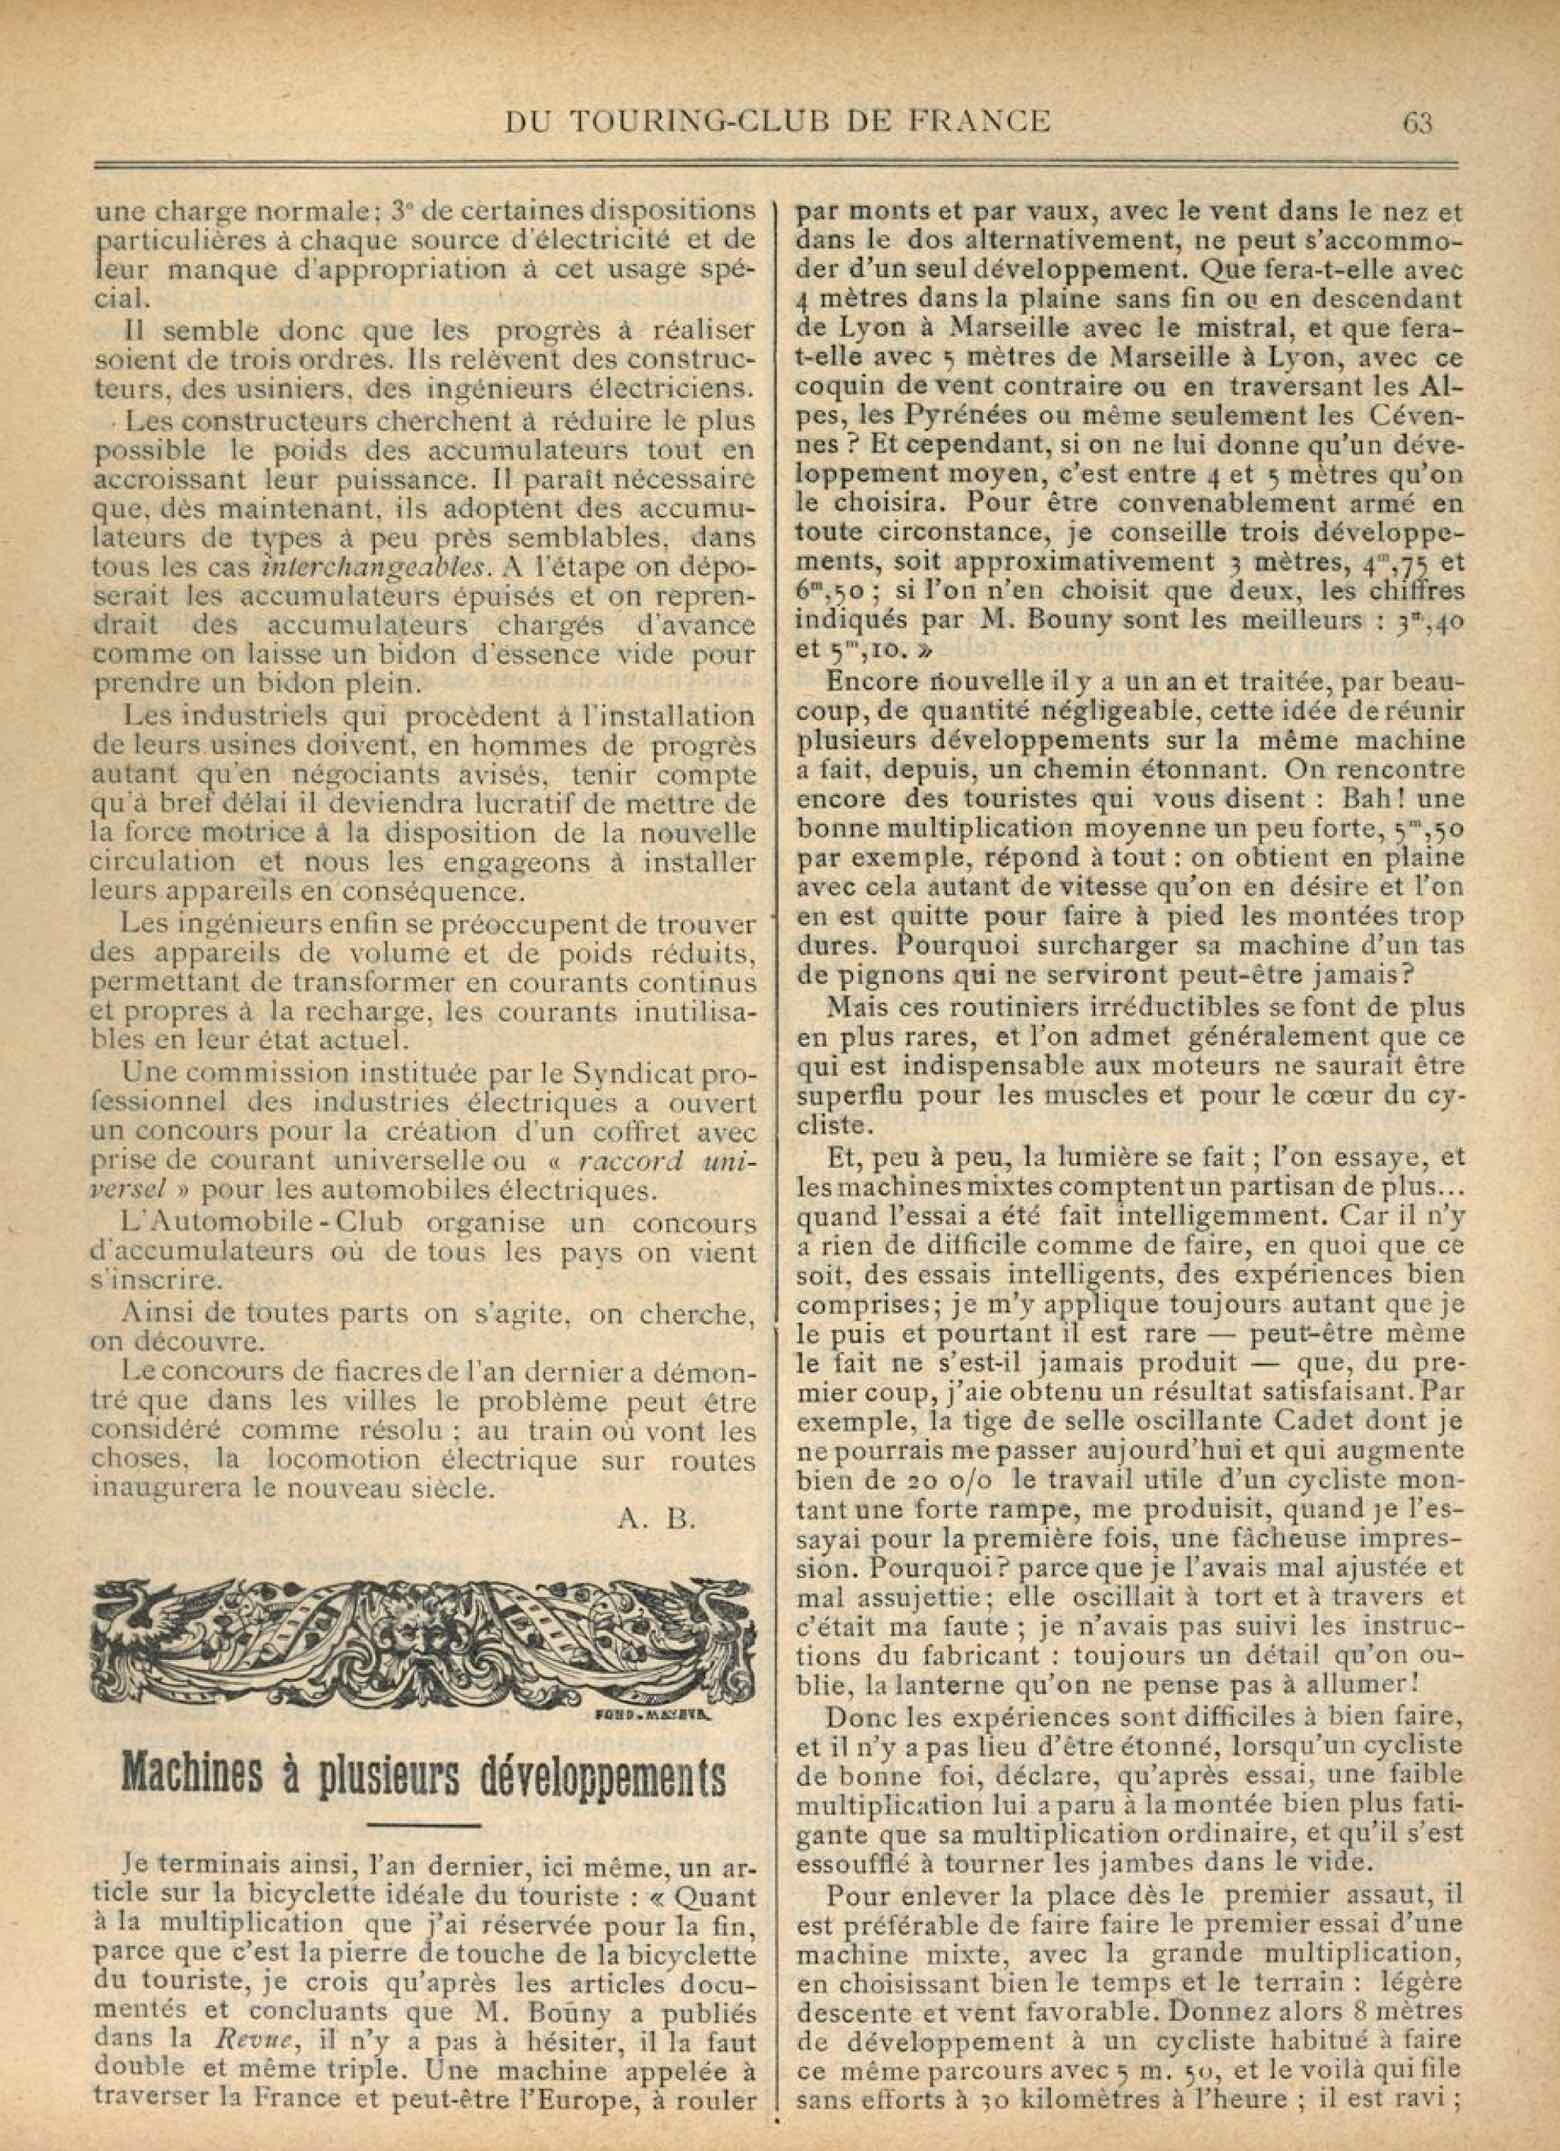 T.C.F. Revue Mensuelle February 1899 - Machines a plusieurs developpements scan 1 main image